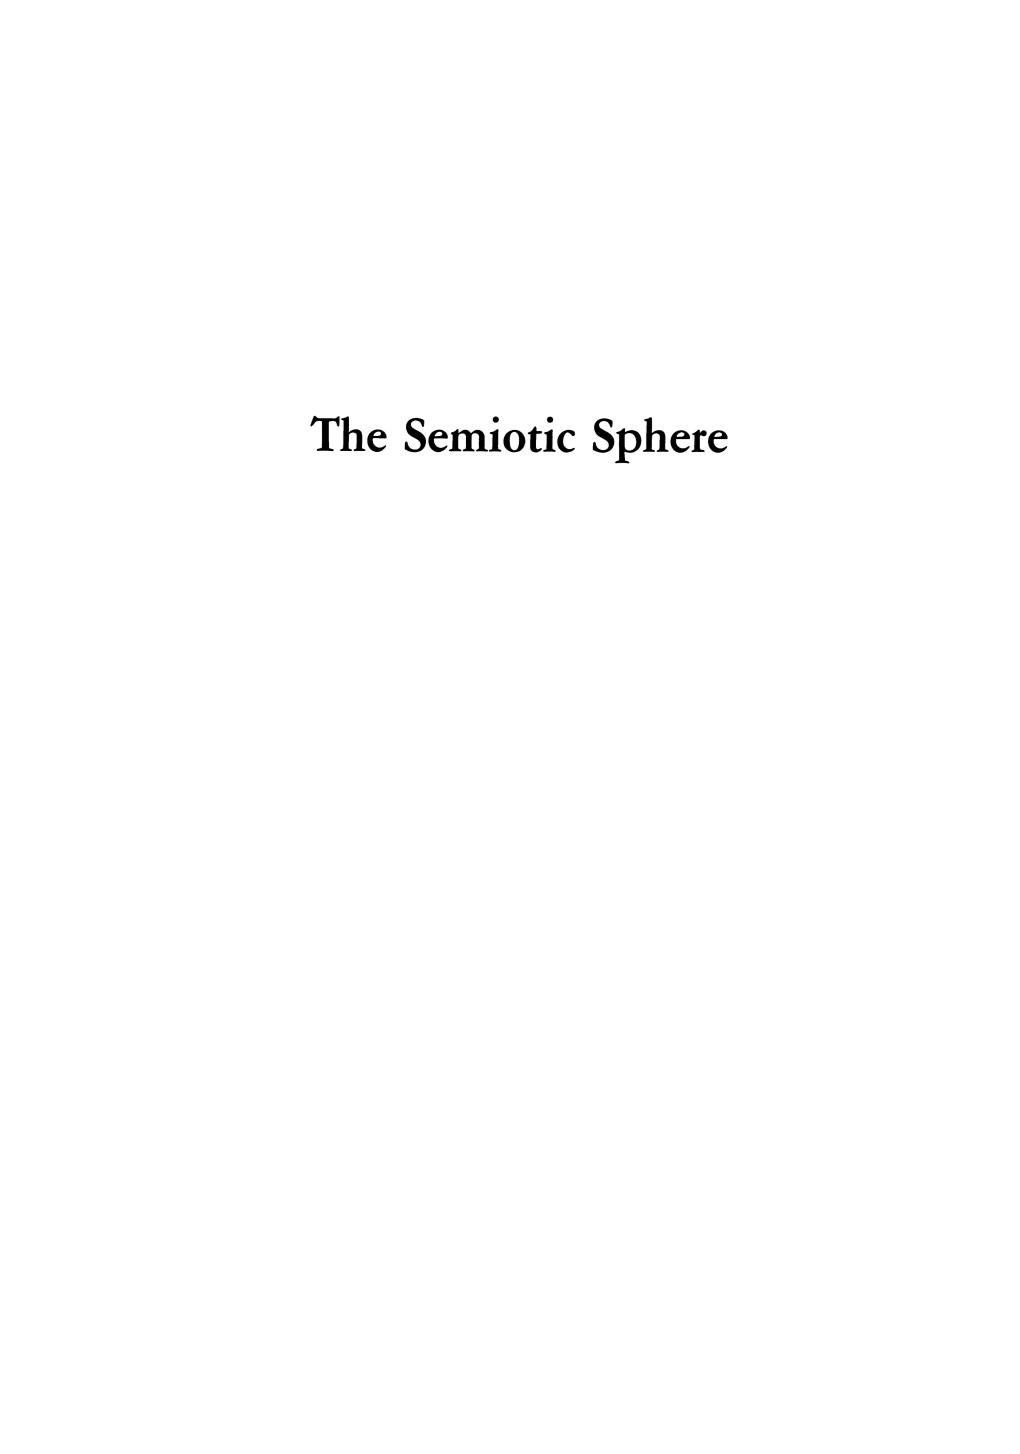 The Semiotic Sphere TOP/CS /N CONTEMPORARY SEM/OT/CS Series Editors: Thomas A